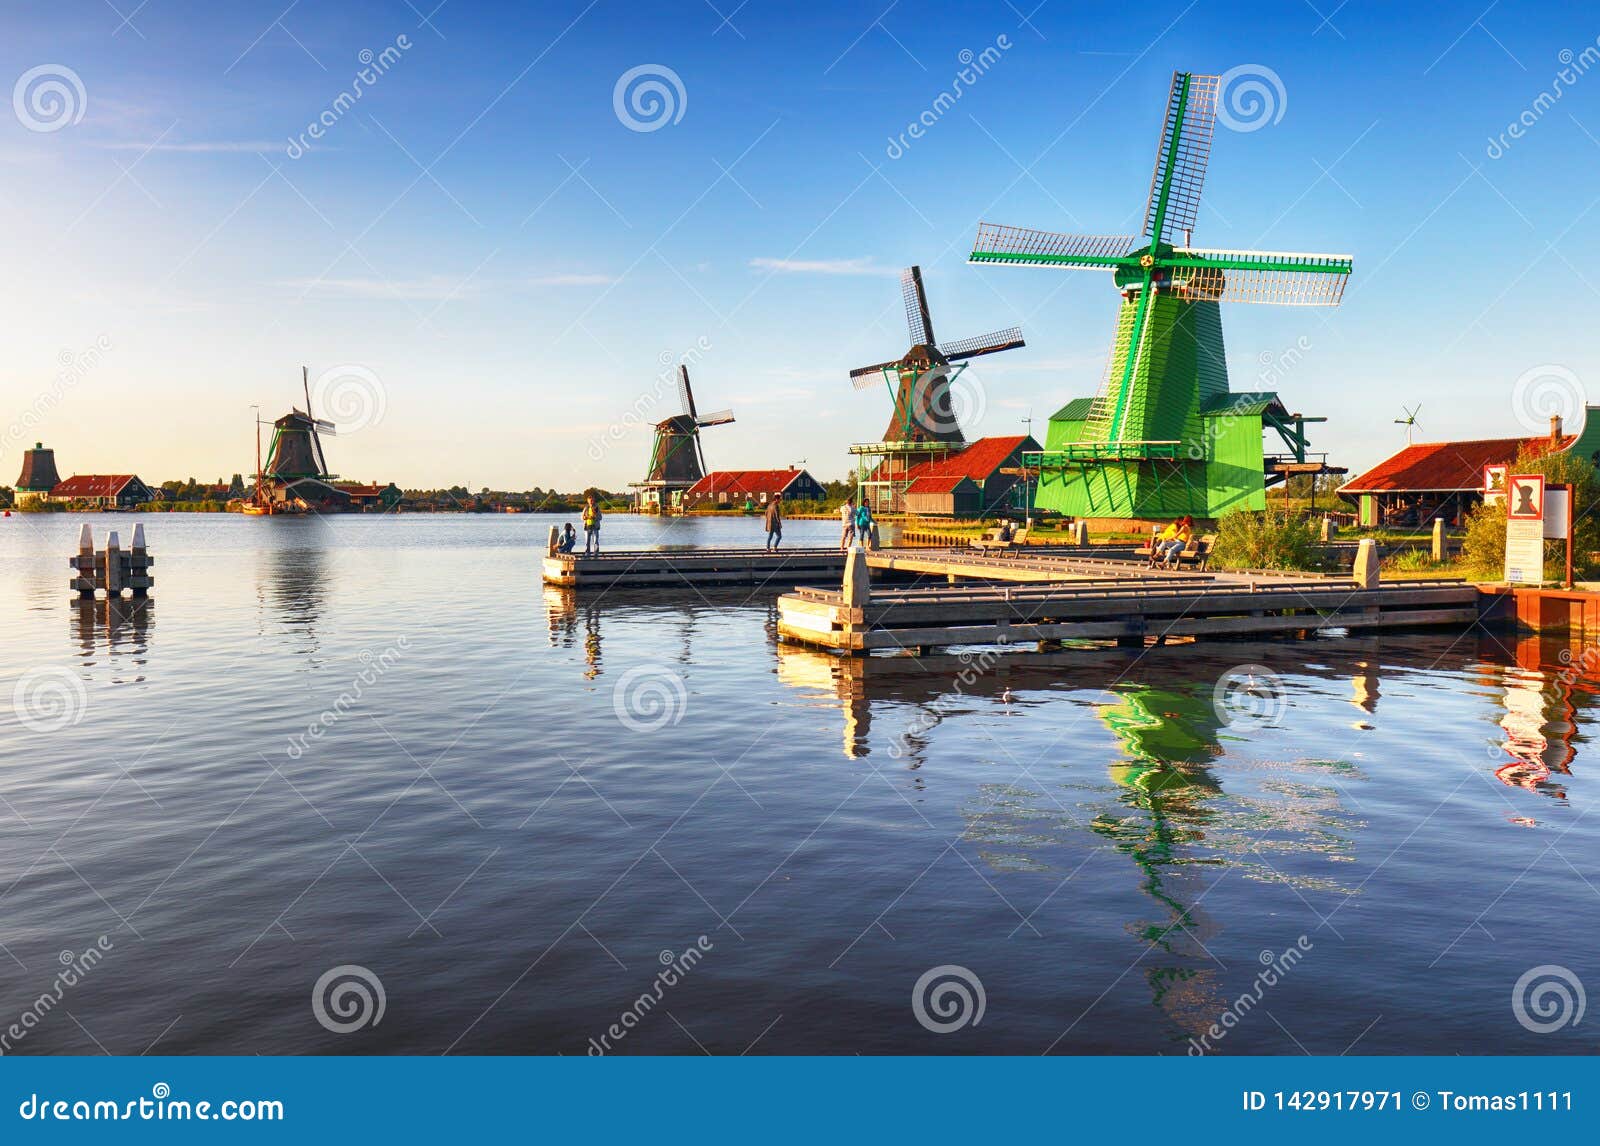 Wiskunde Geruststellen echtgenoot Netherlands Windmill, Zaanse Schans - Zaandam, Near Amsterdam Stock Image -  Image of background, panorama: 142917971